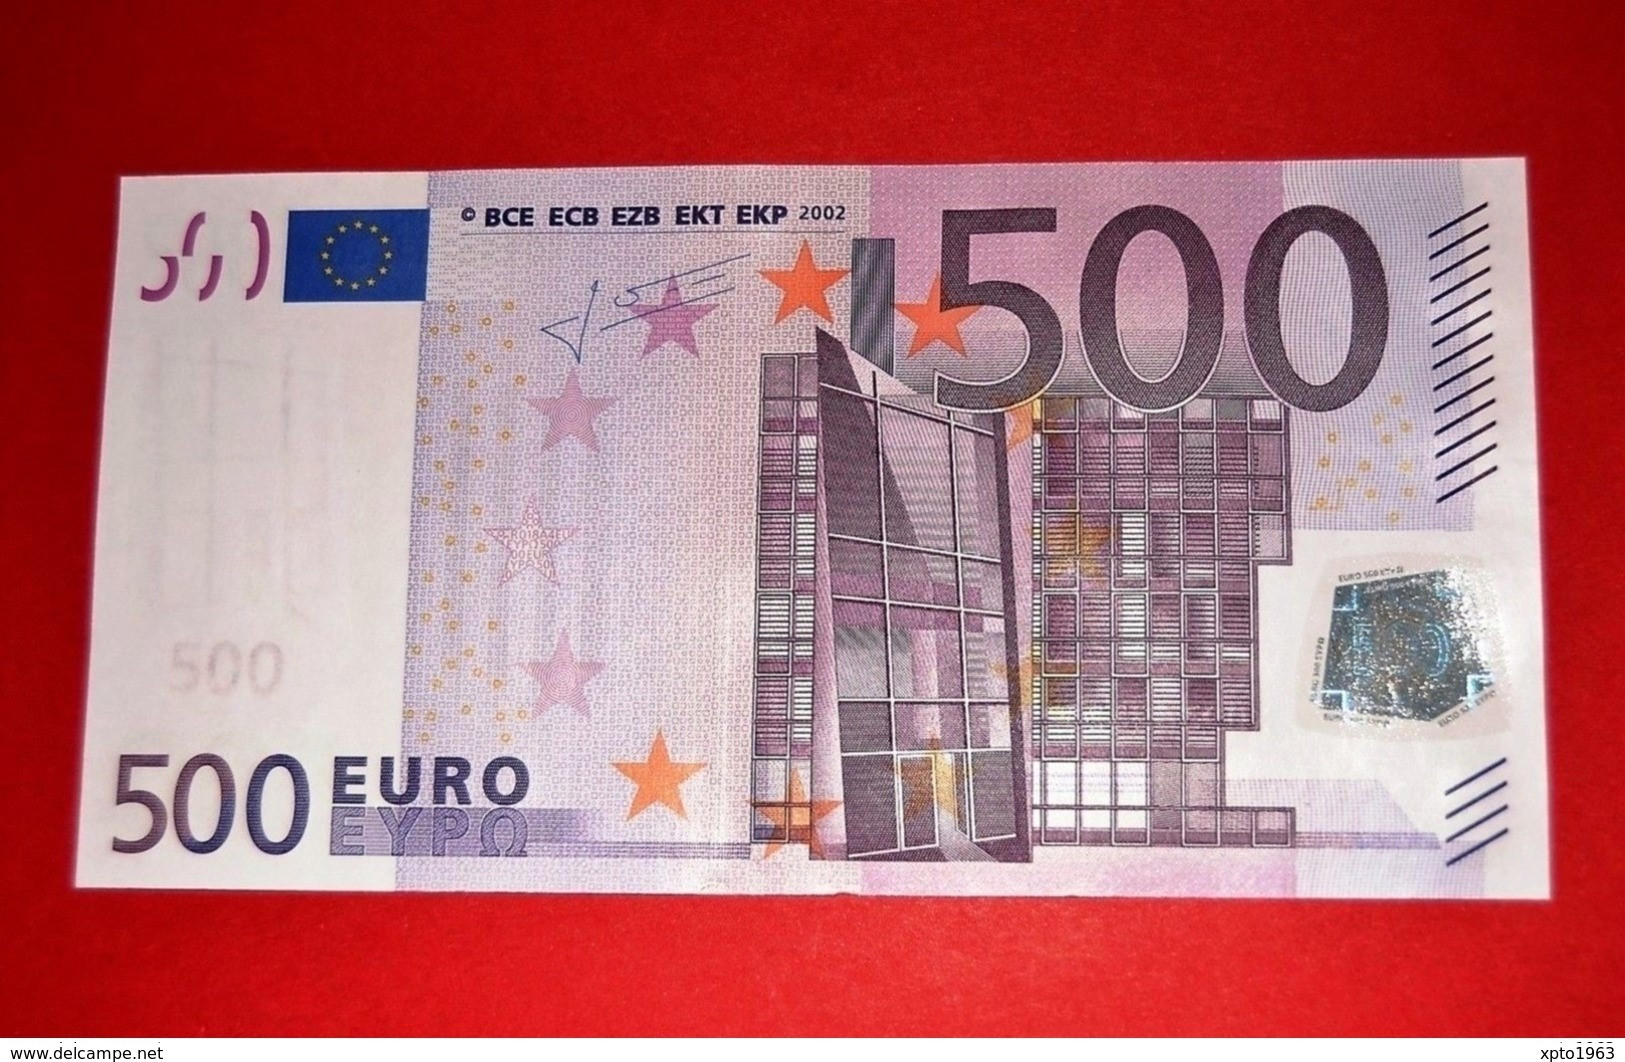 500 EURO GERMANY  R018A4 - X09362825606 - UNC - NEUF - 500 Euro